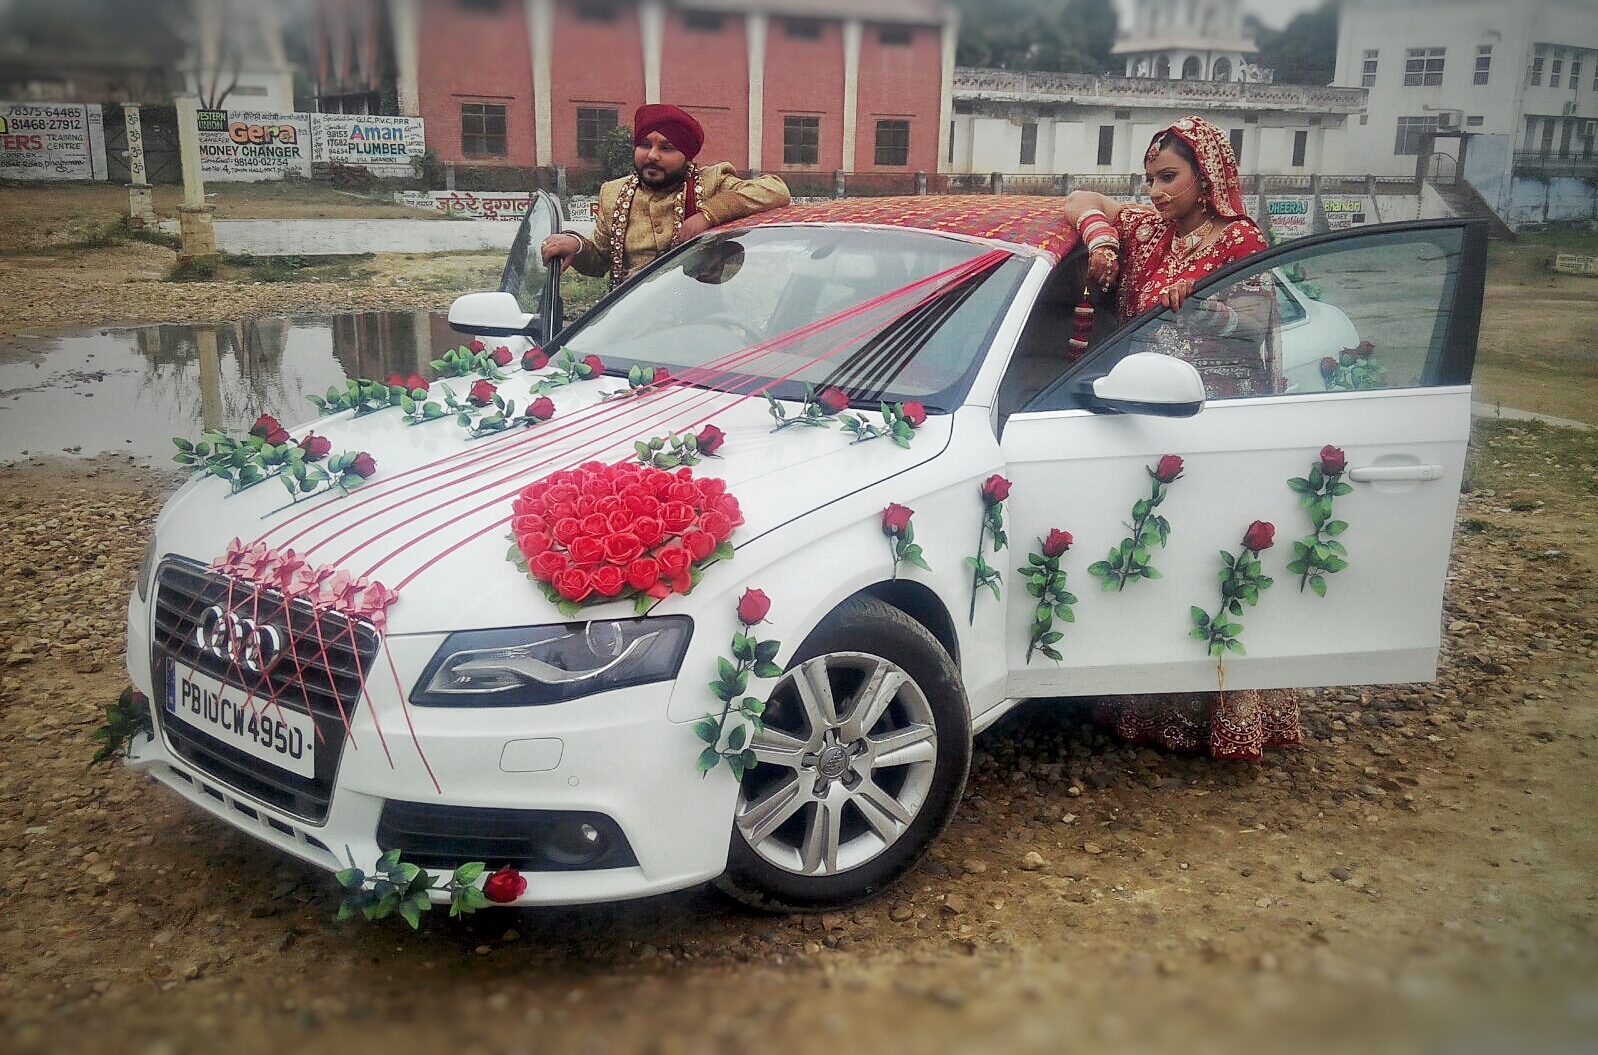 JUST MARRIED PUNEET BASSI weds PRABHJOT KAUR (15th Jan 2016) PUNEET BASSI weds PRABHJOT KAUR (15th Jan 2016) for wedding rental in Punjab, India